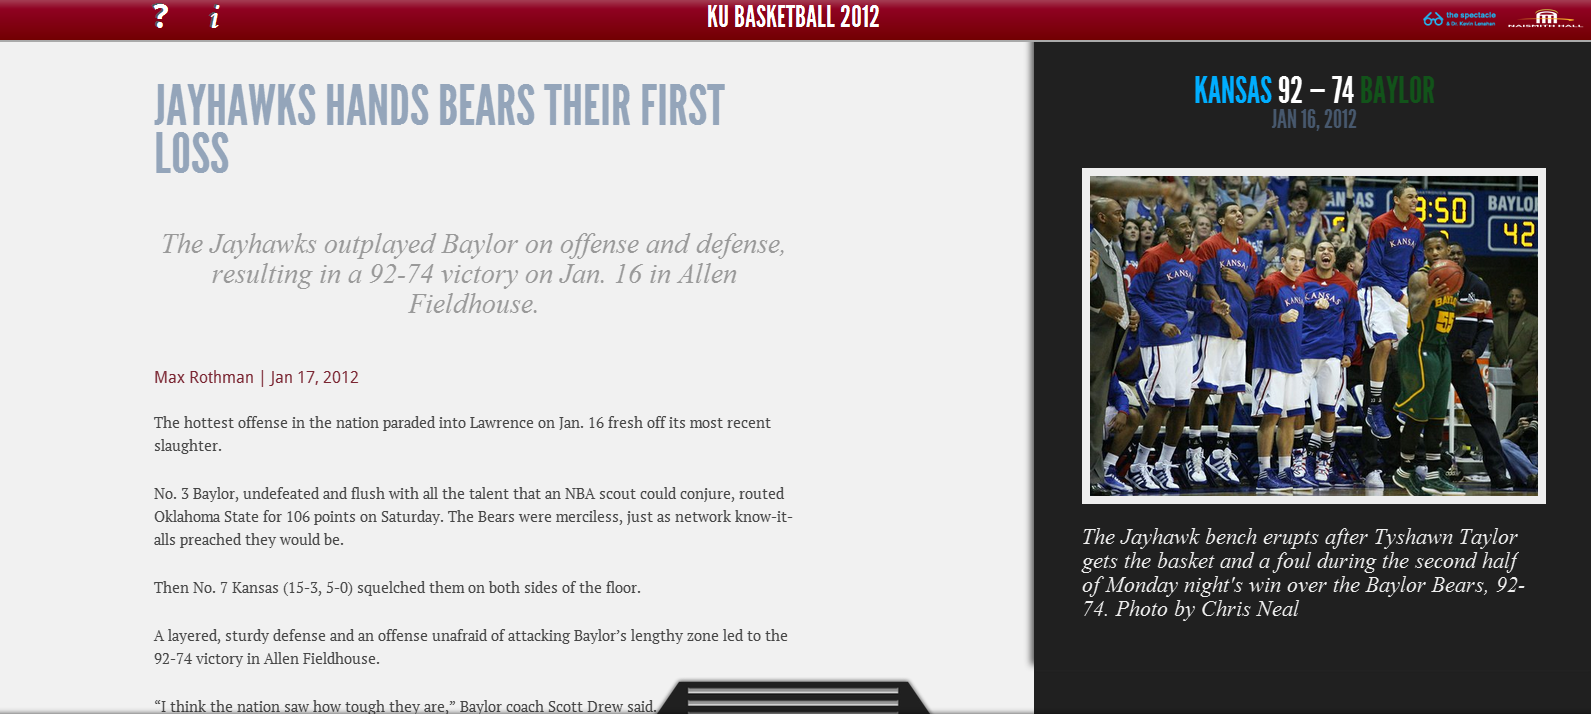 Men's Basketball 2012 Digital Edition